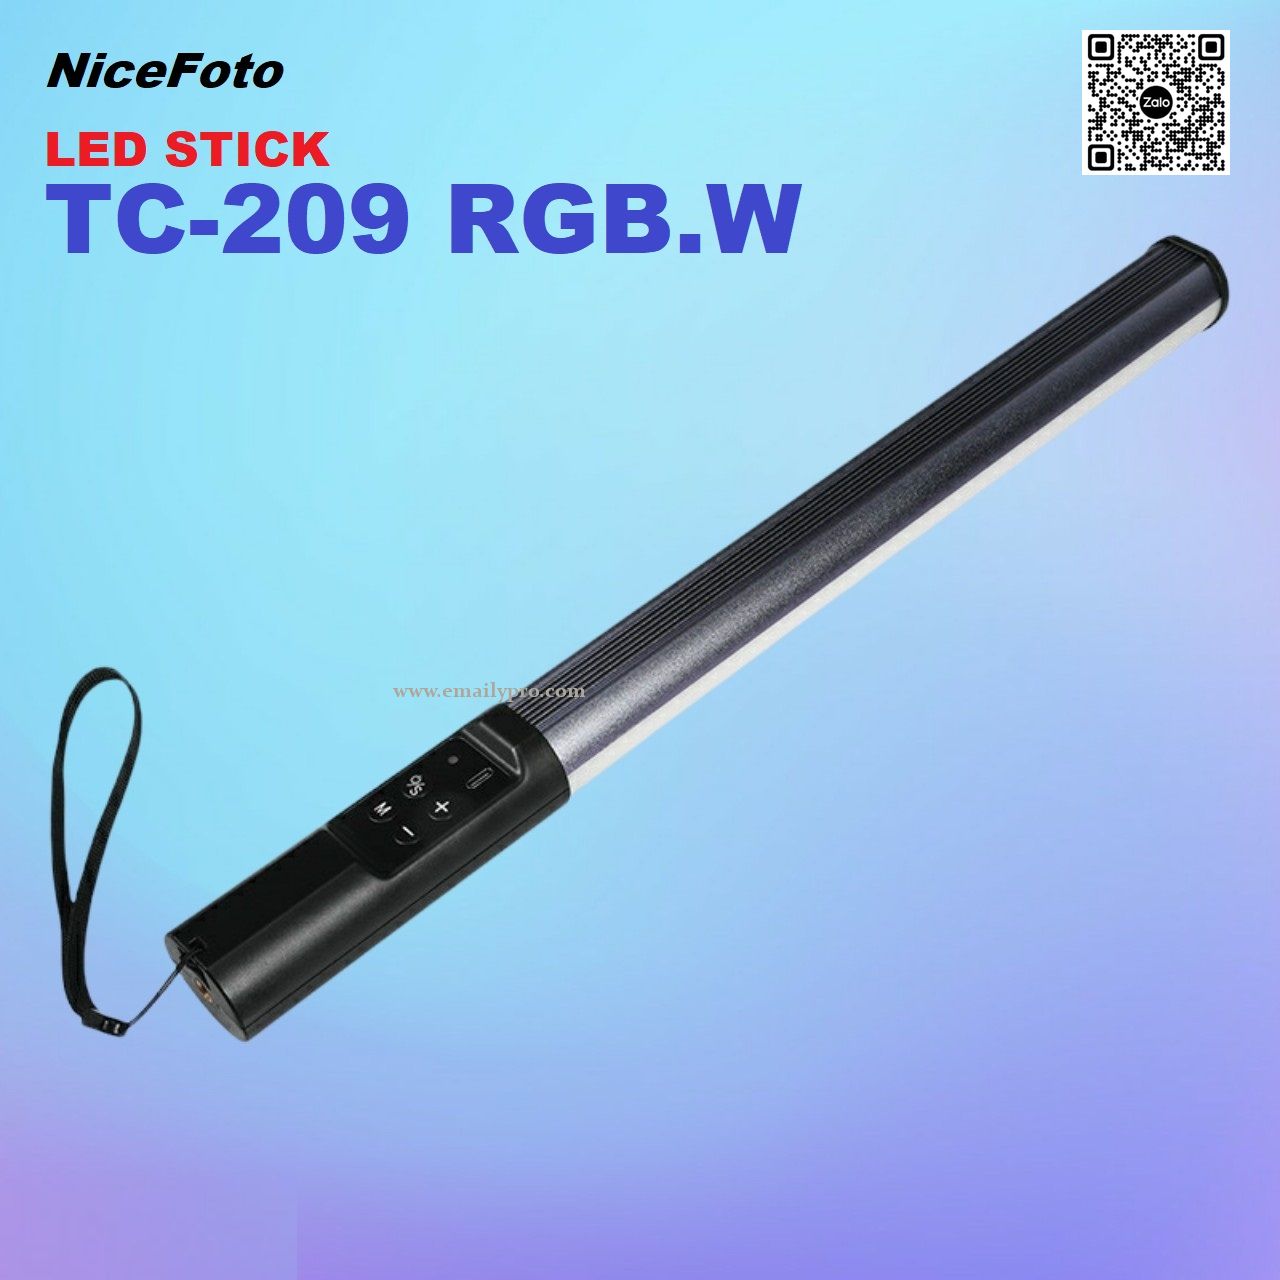 LED STICK NiceFoto TC-209 RGB.W